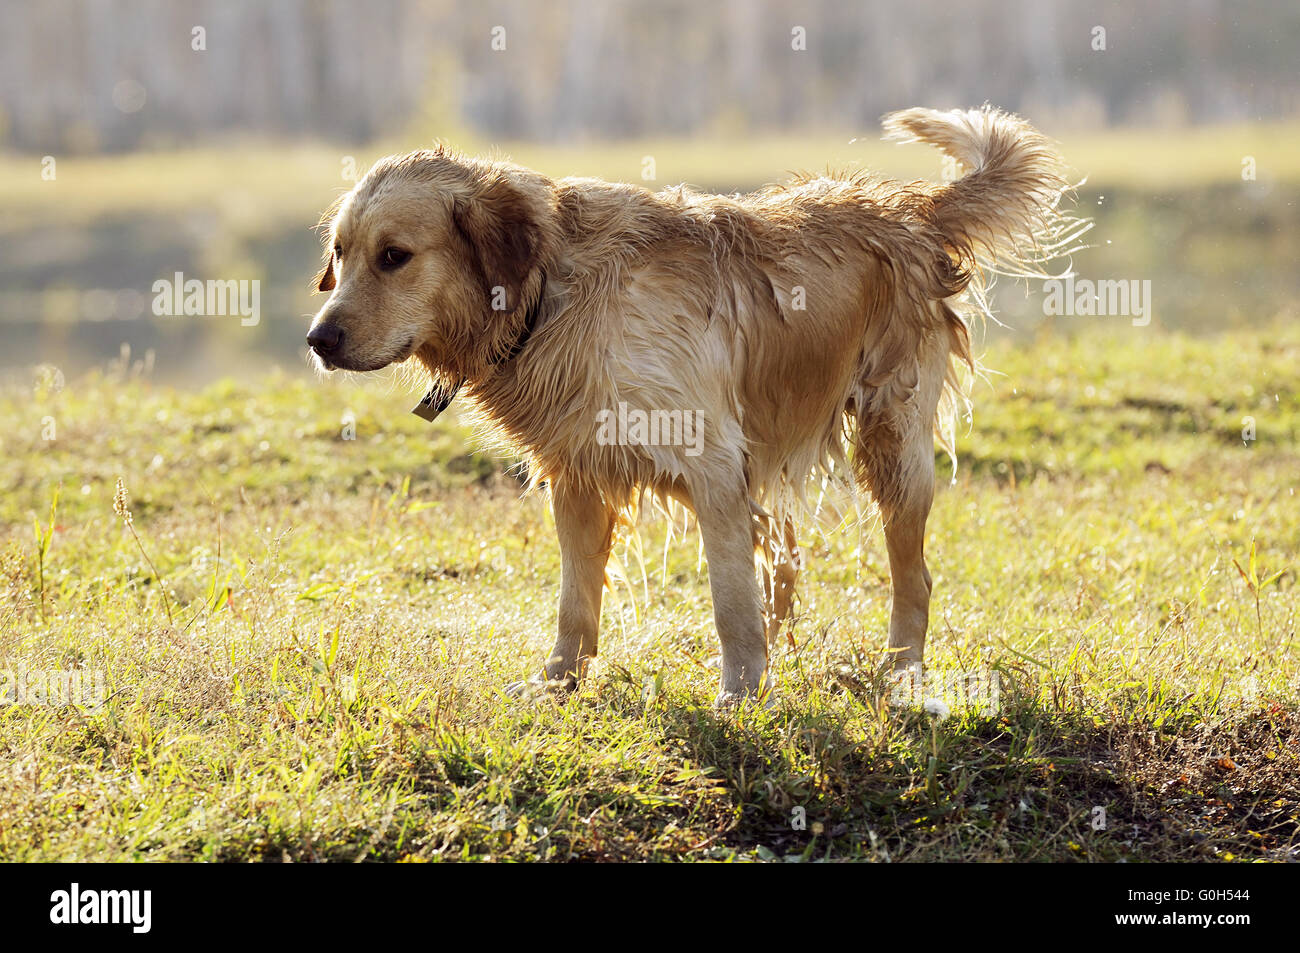 Wet Golden retriever dog over blurry background Stock Photo